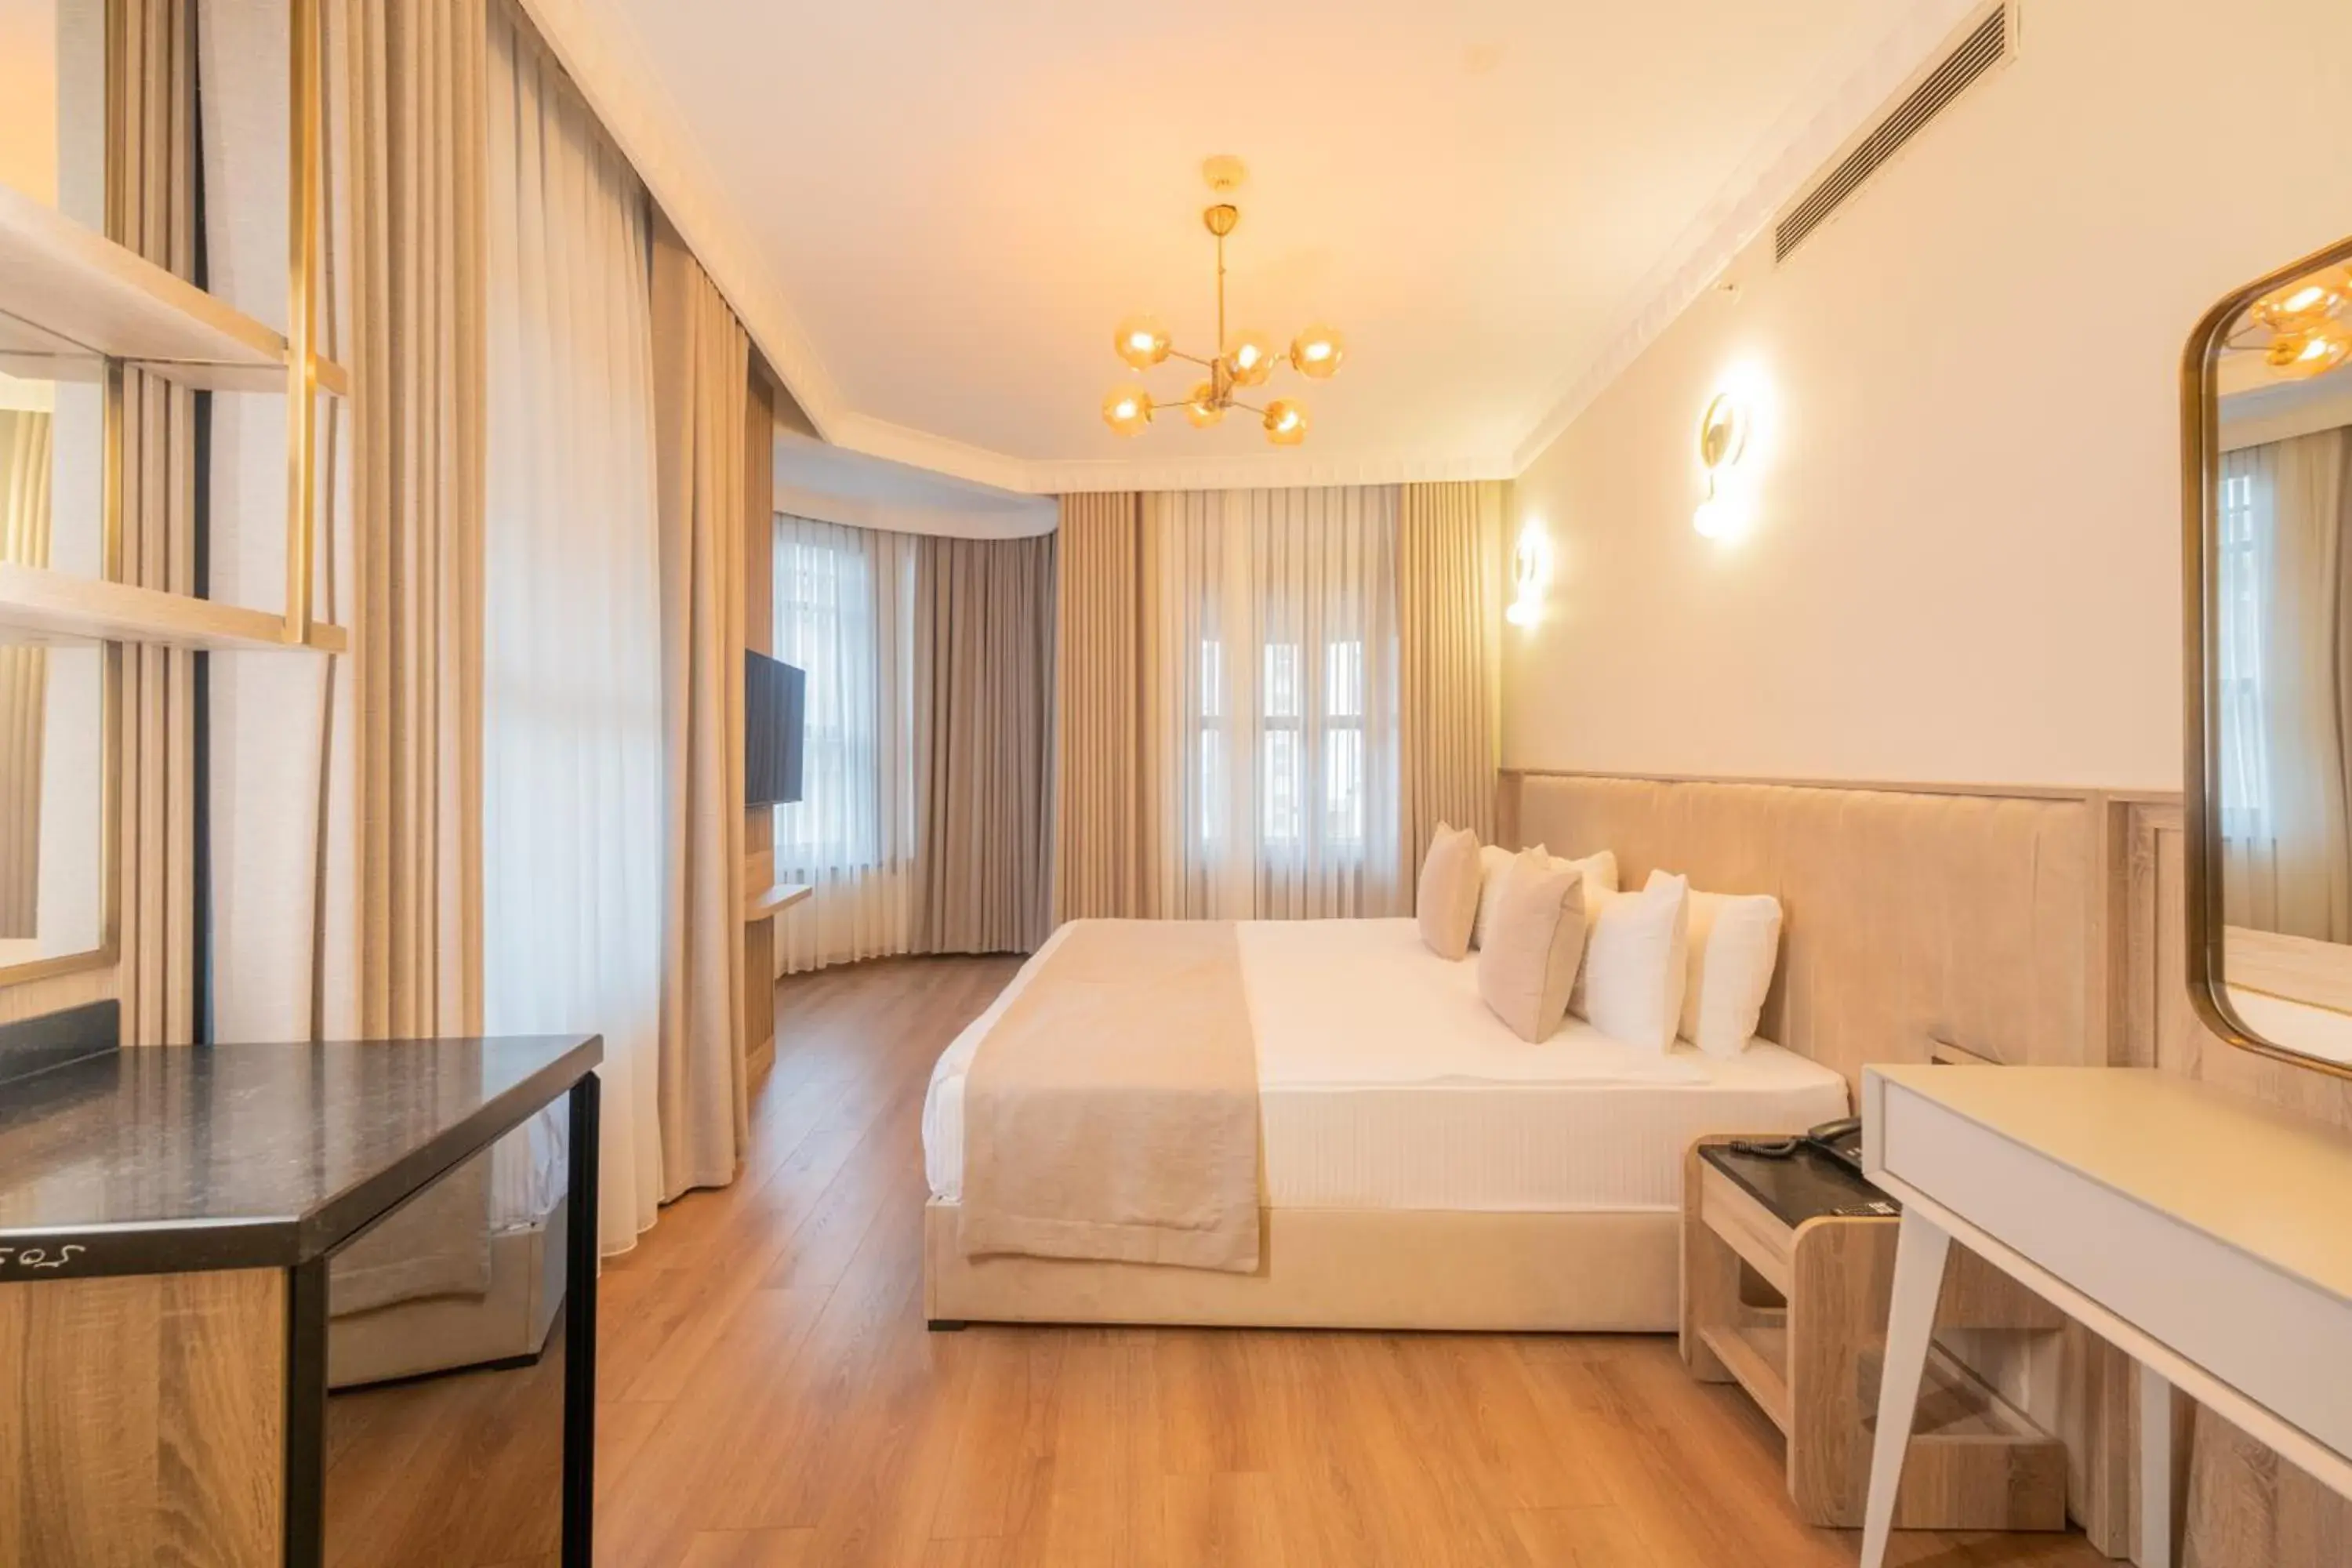 Bedroom in Atik Palas Hotel